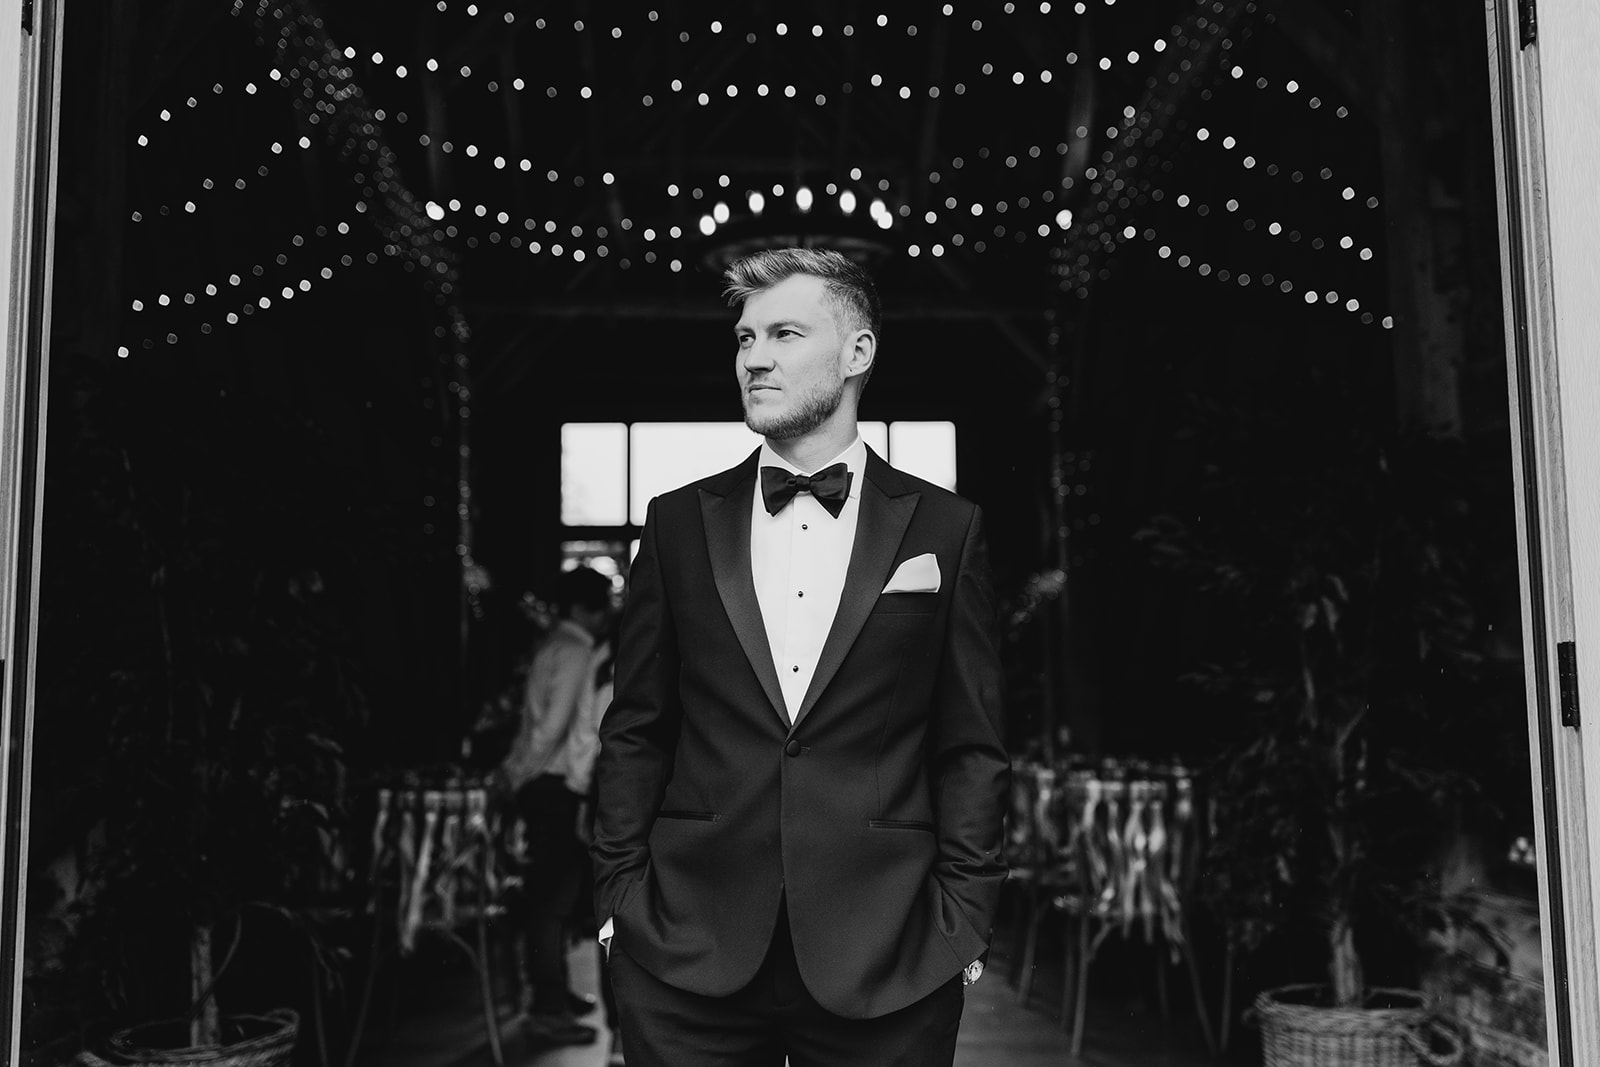 Chris looking dashing in a sleek black tie at his Silchester Farm wedding.